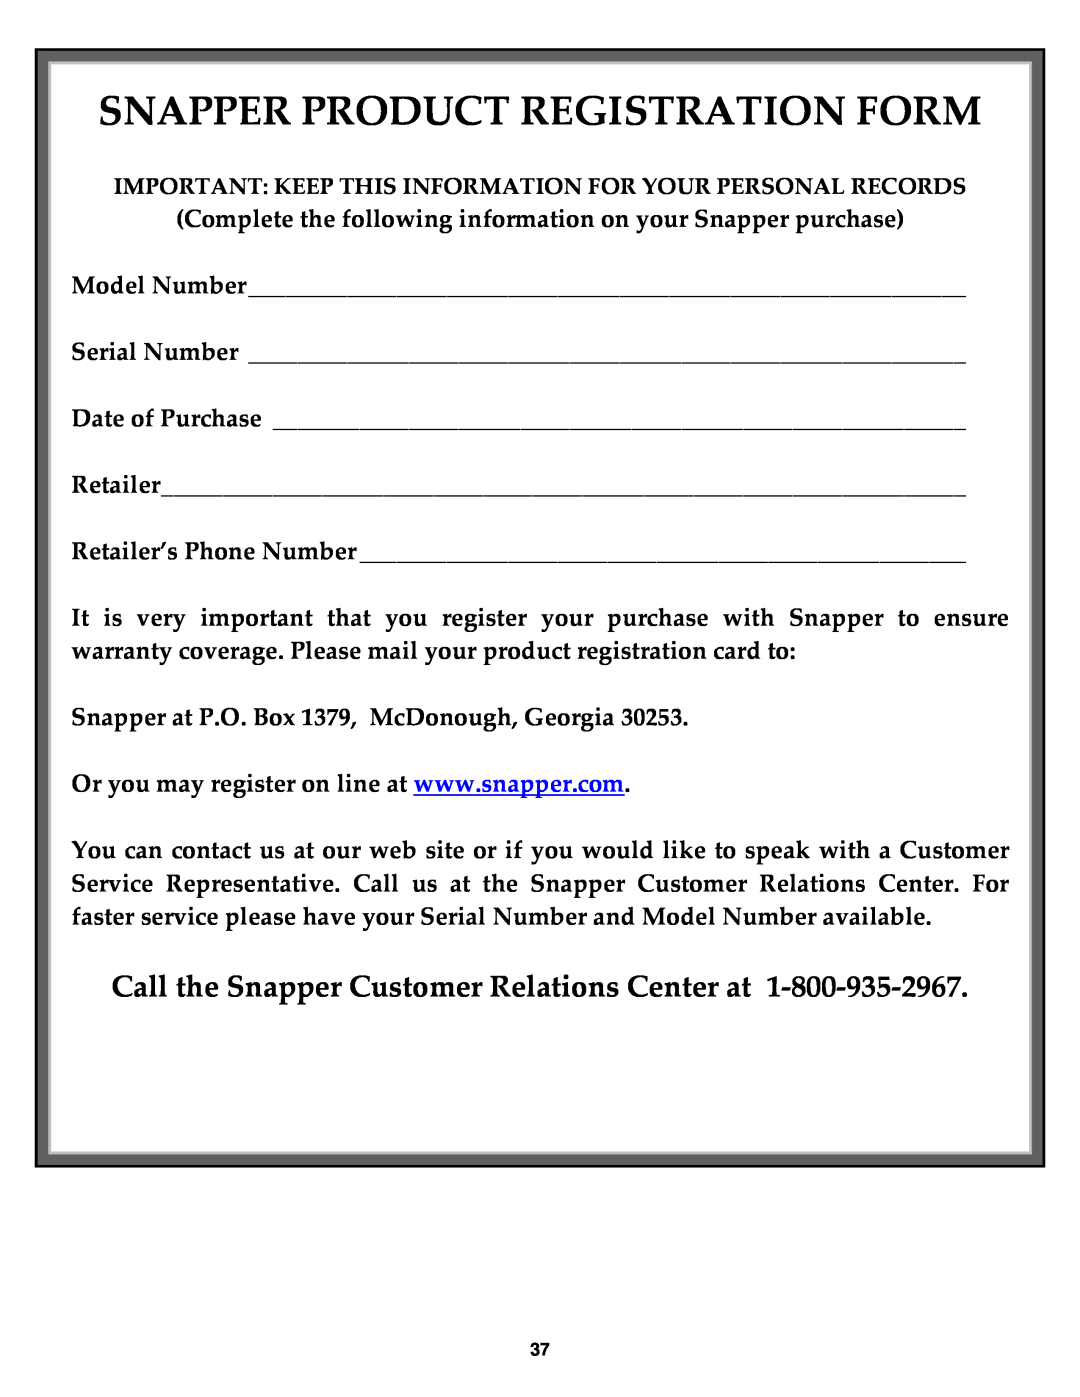 Snapper NZMJ25612KH, NZMJ23522KH Snapper Product Registration Form, Call the Snapper Customer Relations Center at 